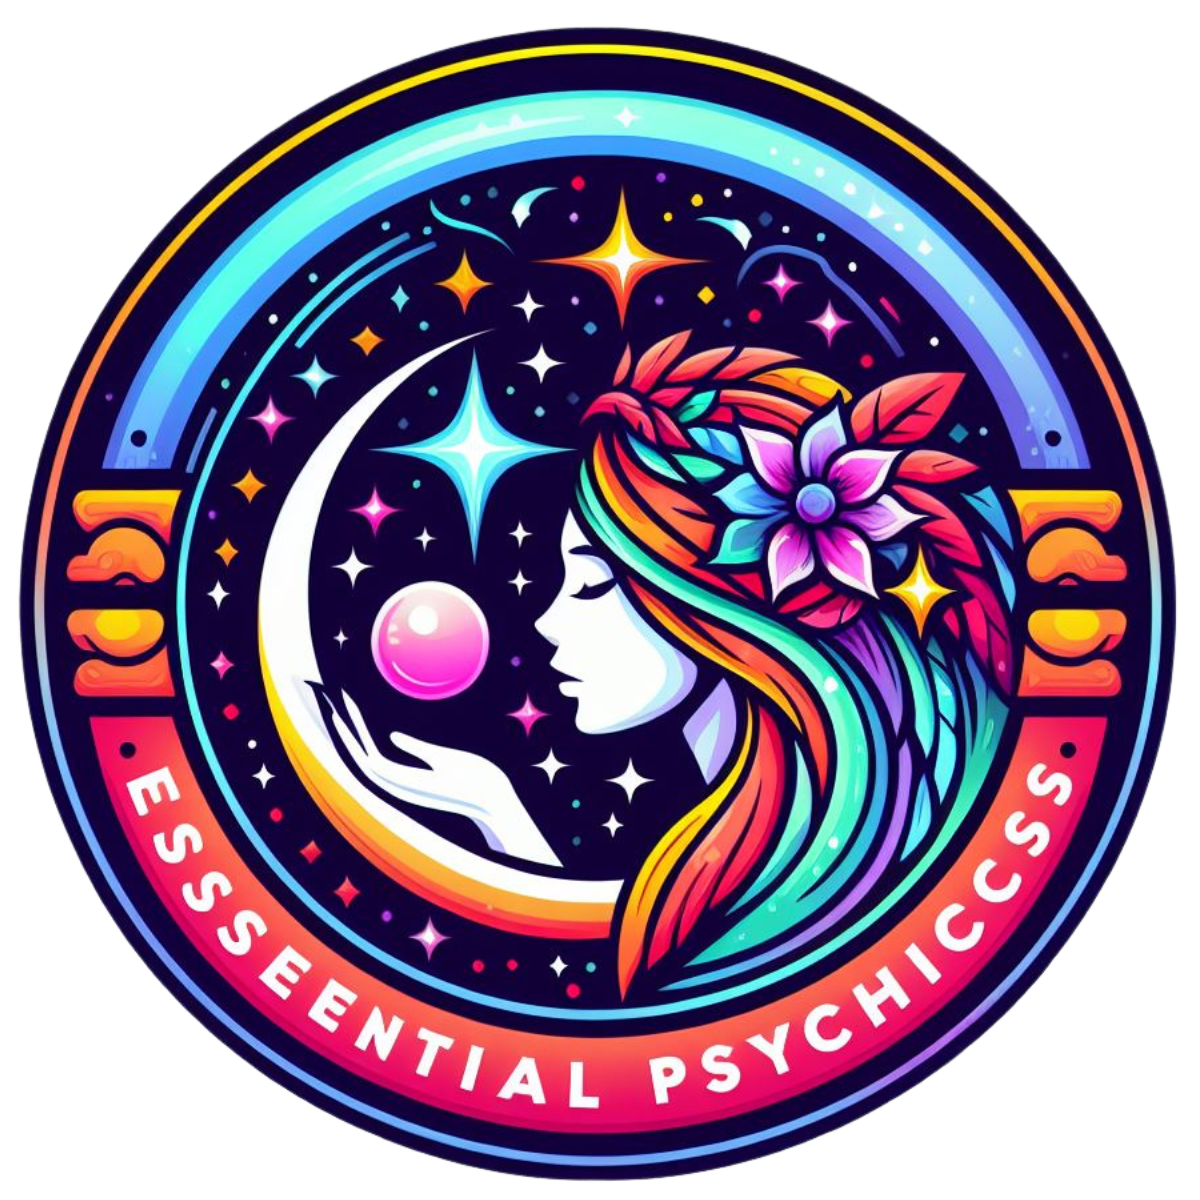 Essential Psychics logo